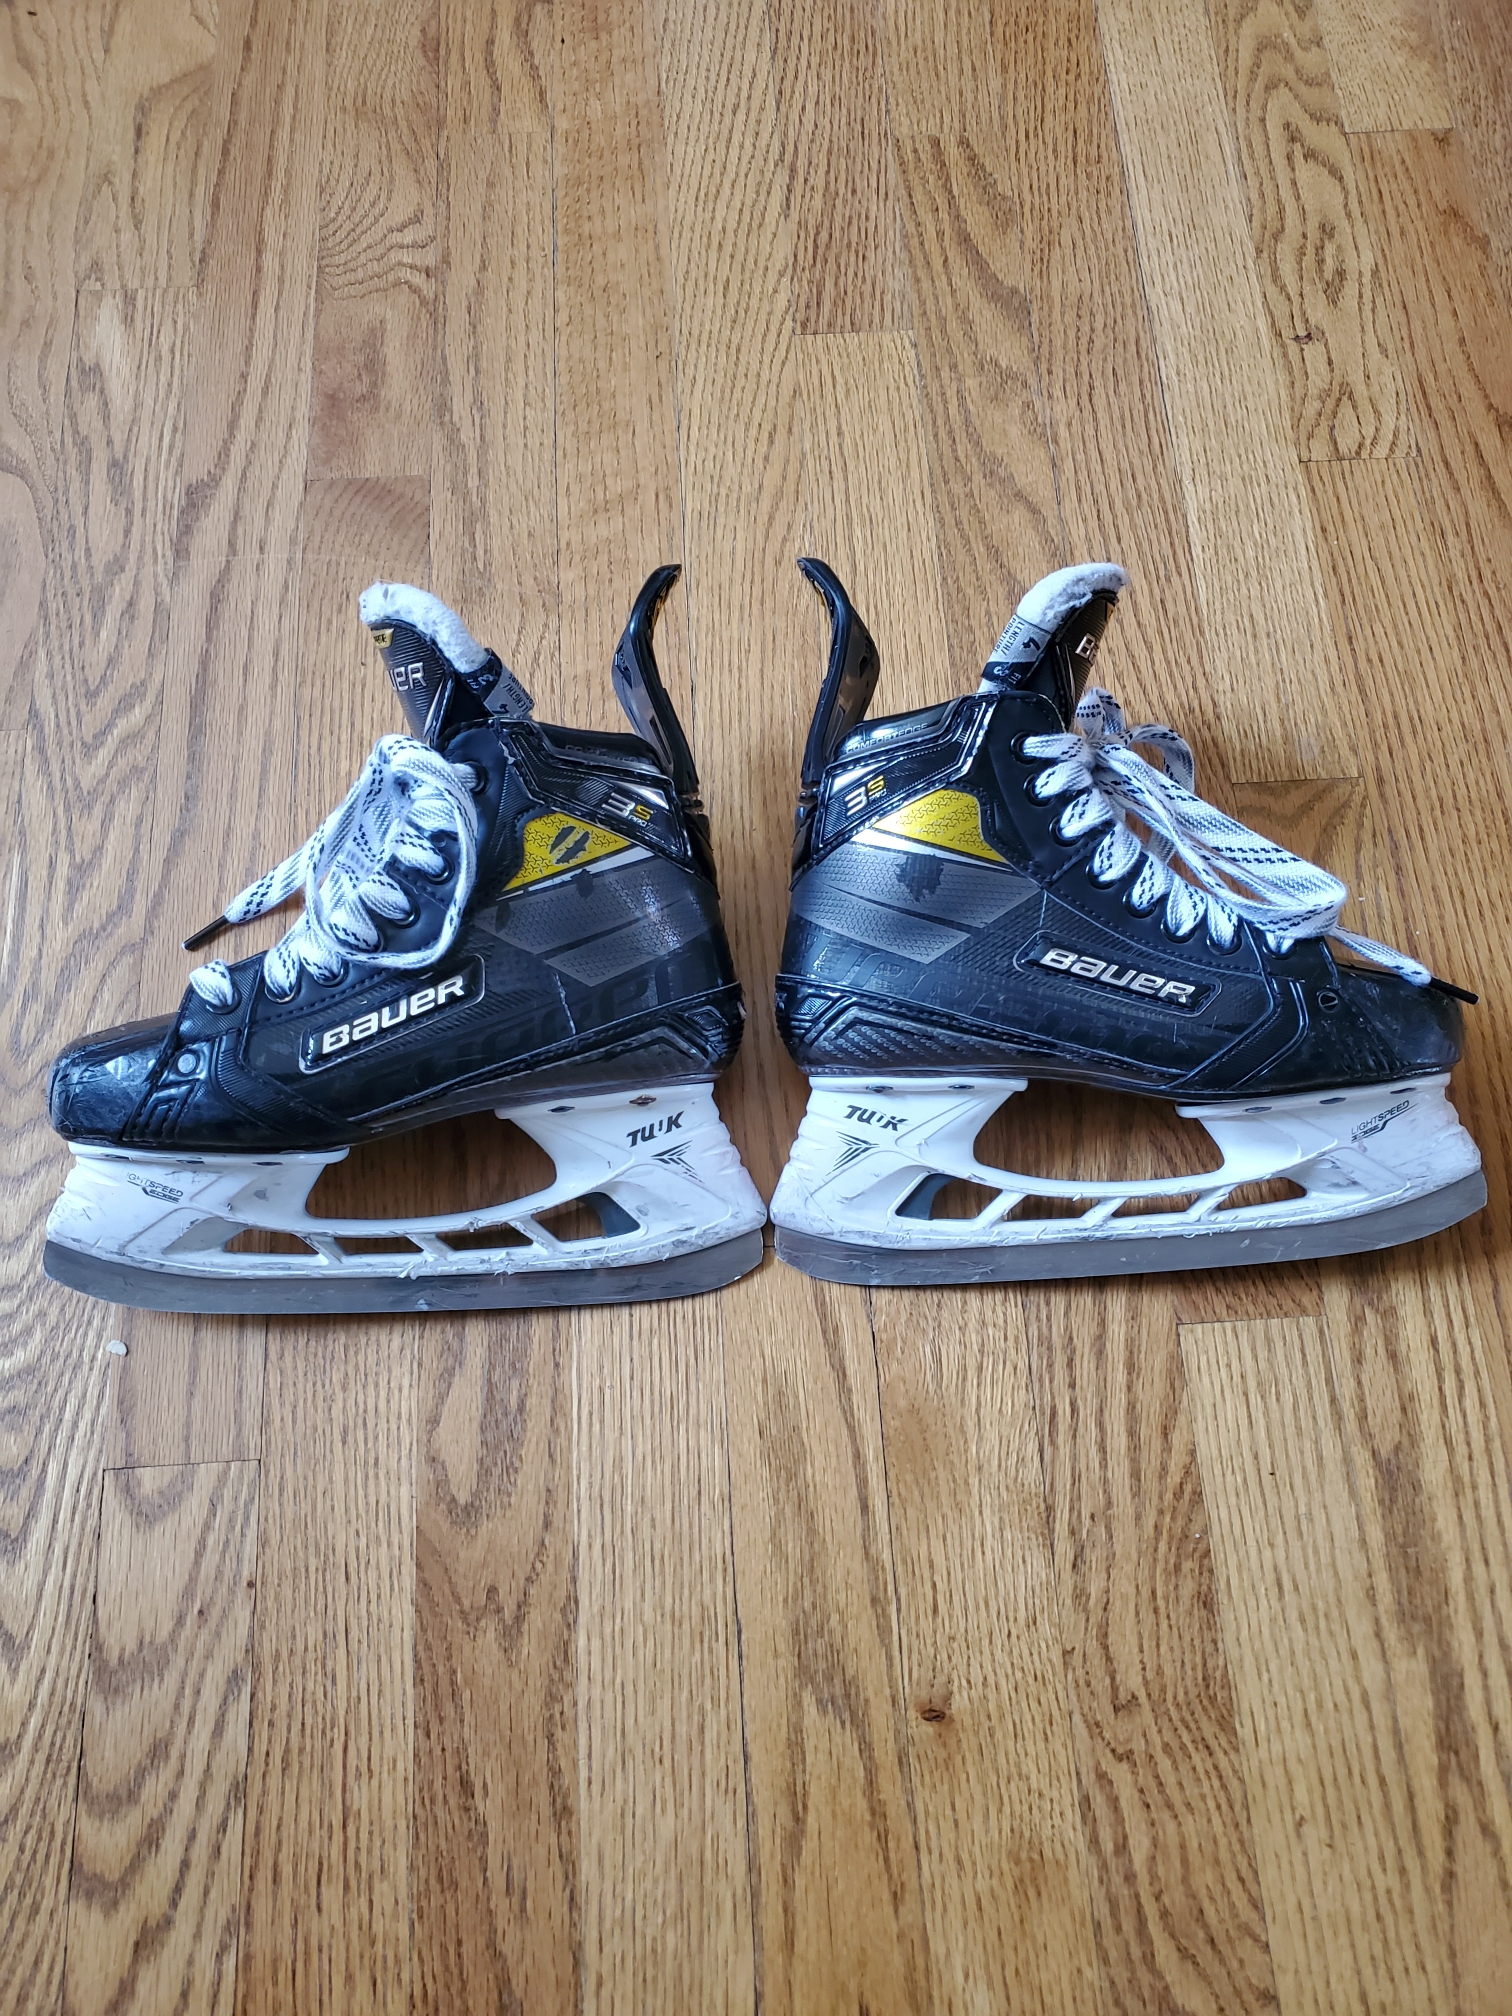 Used Intermediate Bauer Supreme 3S Pro Hockey Skates Size 4